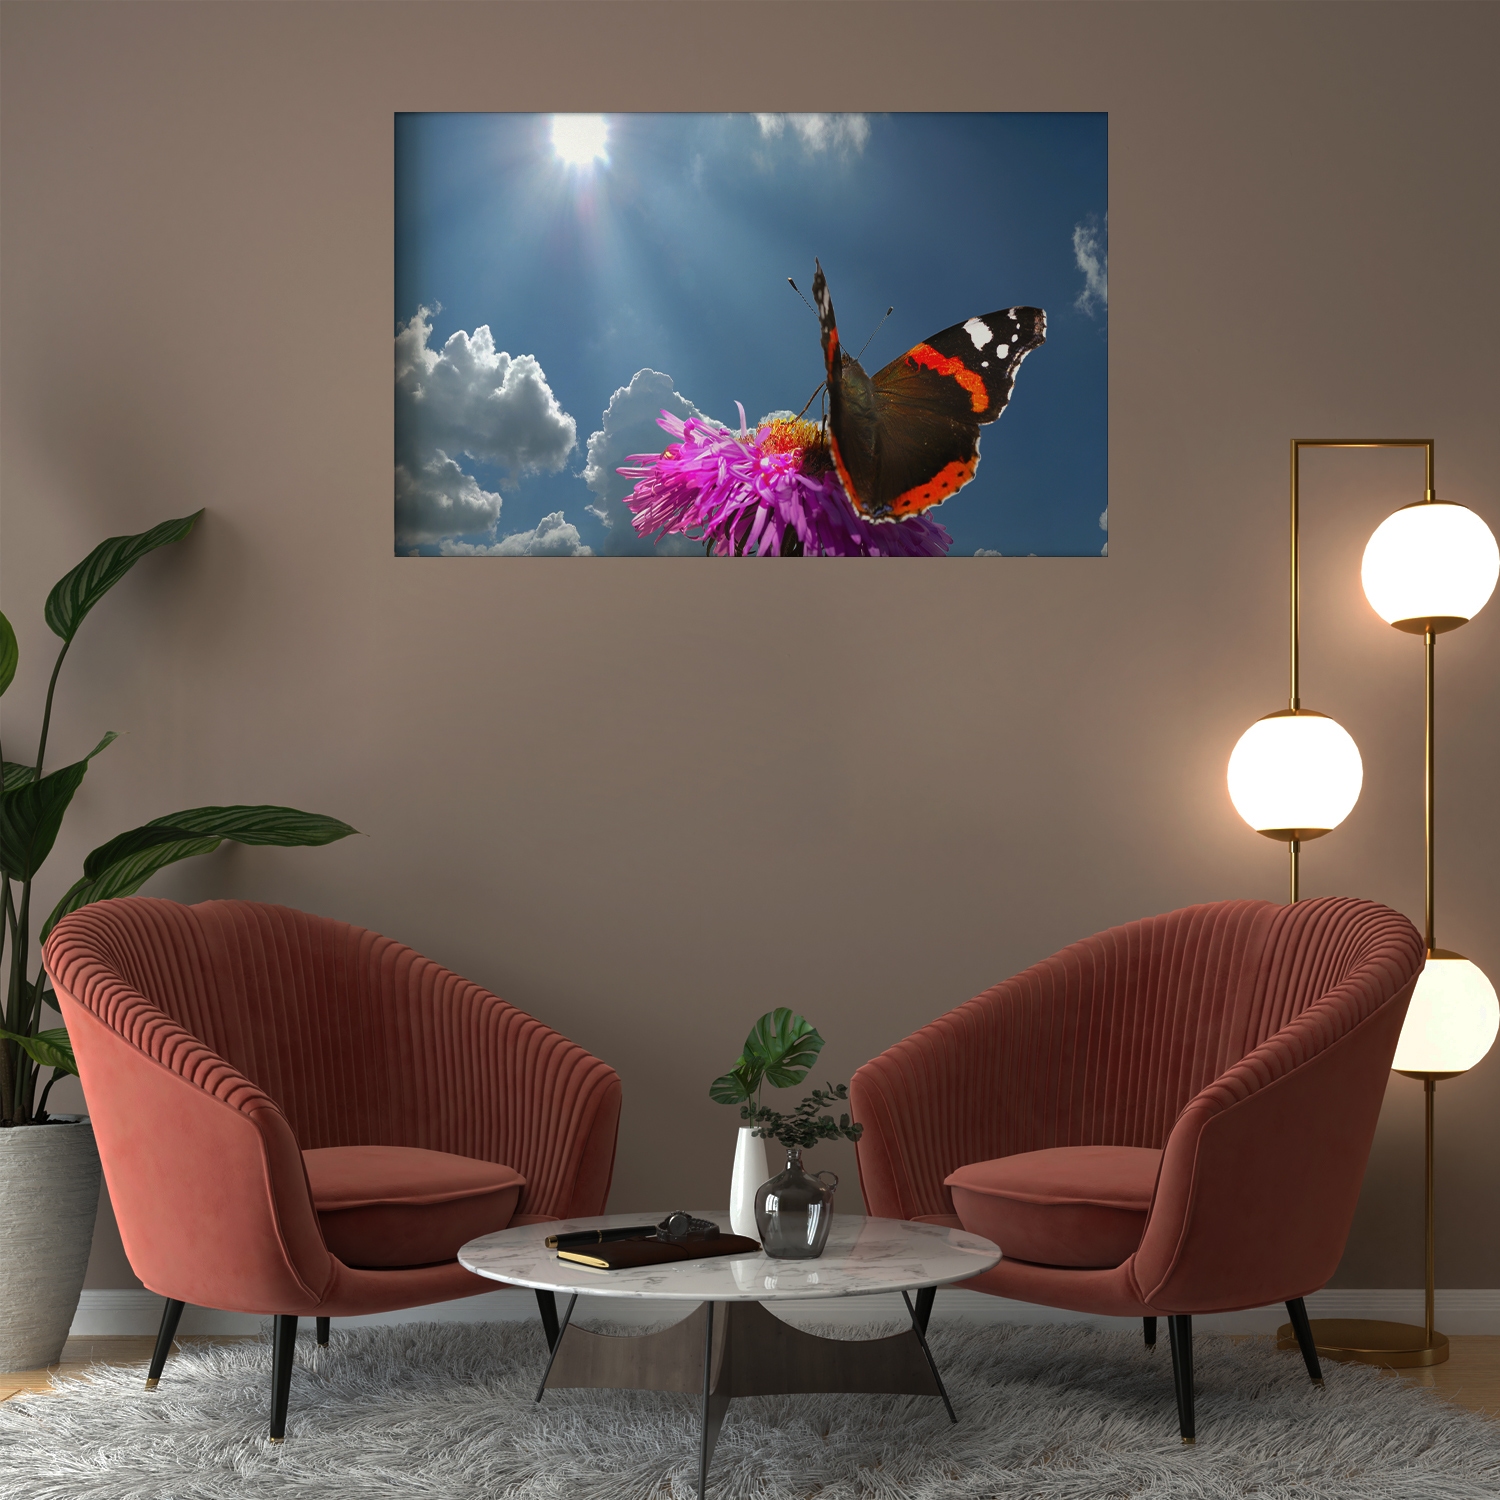 Tablou canvas luminos Fluture si floare, Picma, dualview, panza + sasiu lemn, 80 x 120 cm